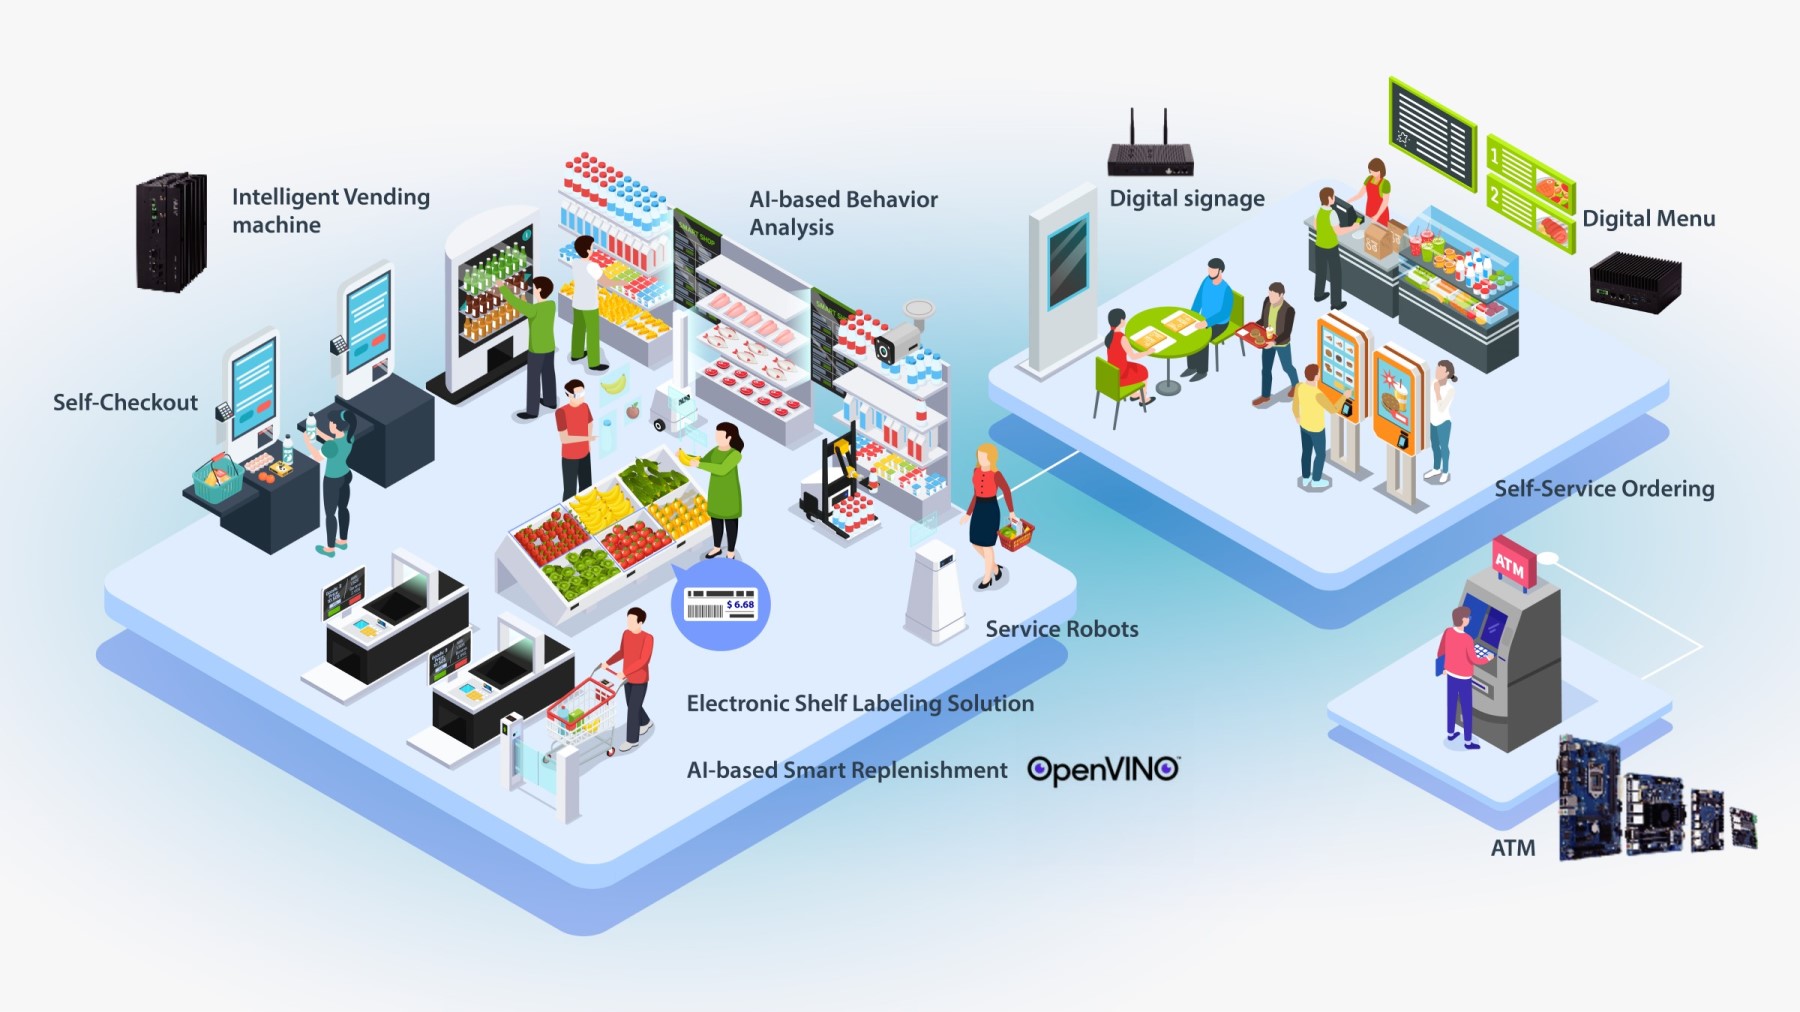 ASUS IoT smart retail scenario contains AI application in supermarket, restaurant and ATM.